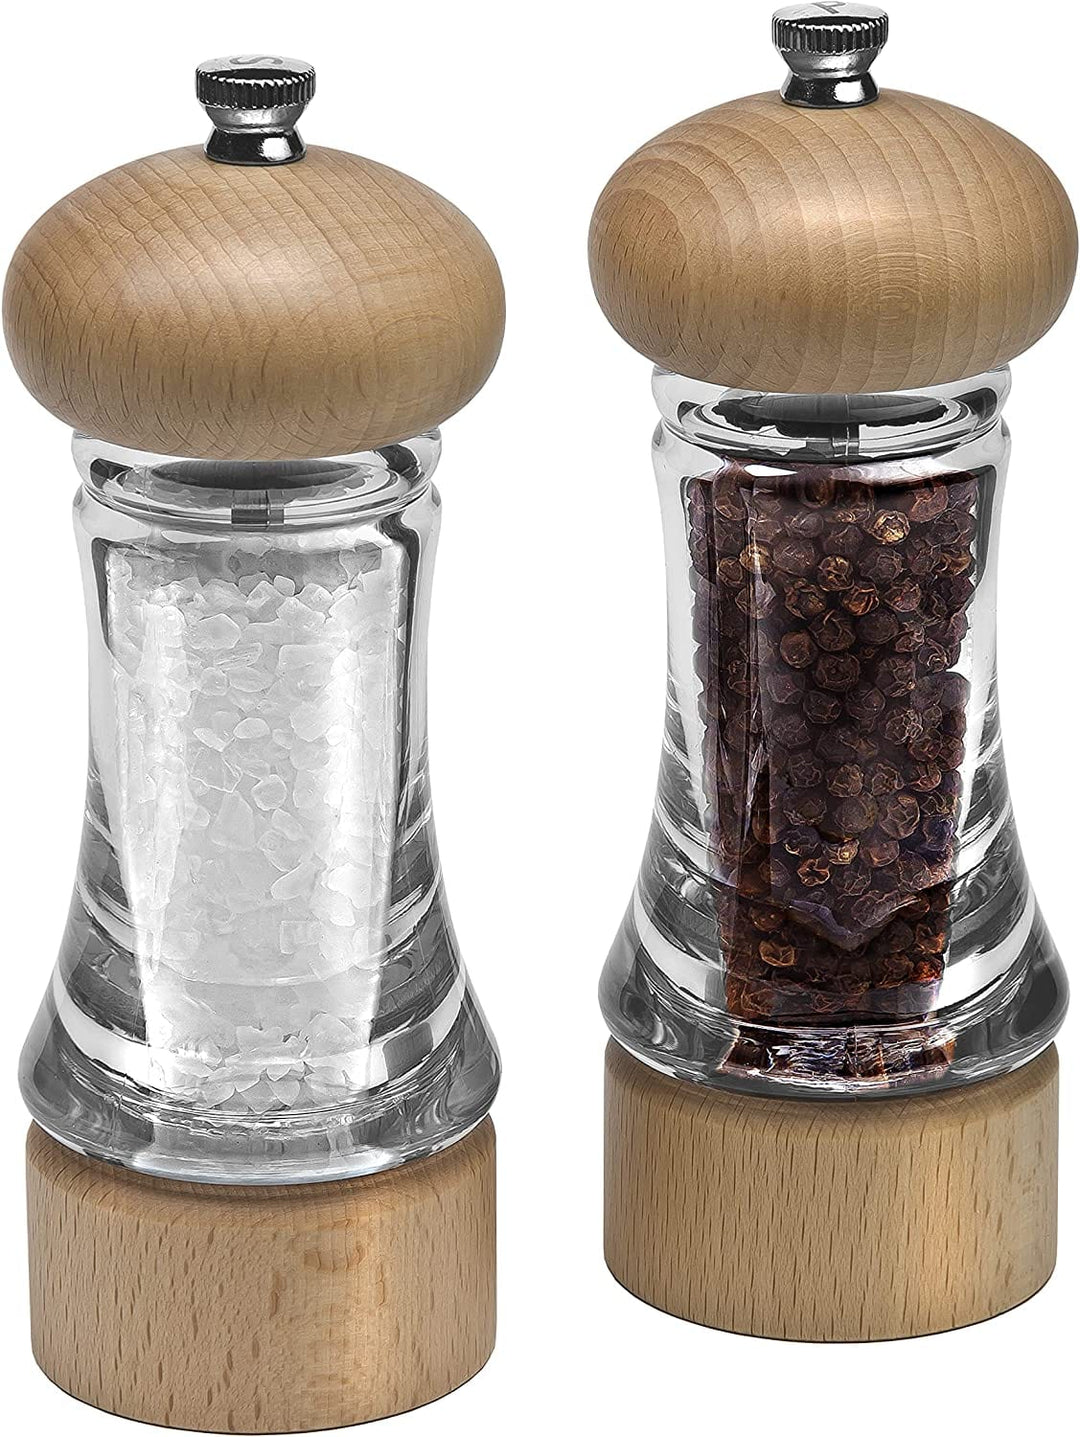 Cole & Mason Derwent Salt and Pepper Grinder Set w/ Refill Top